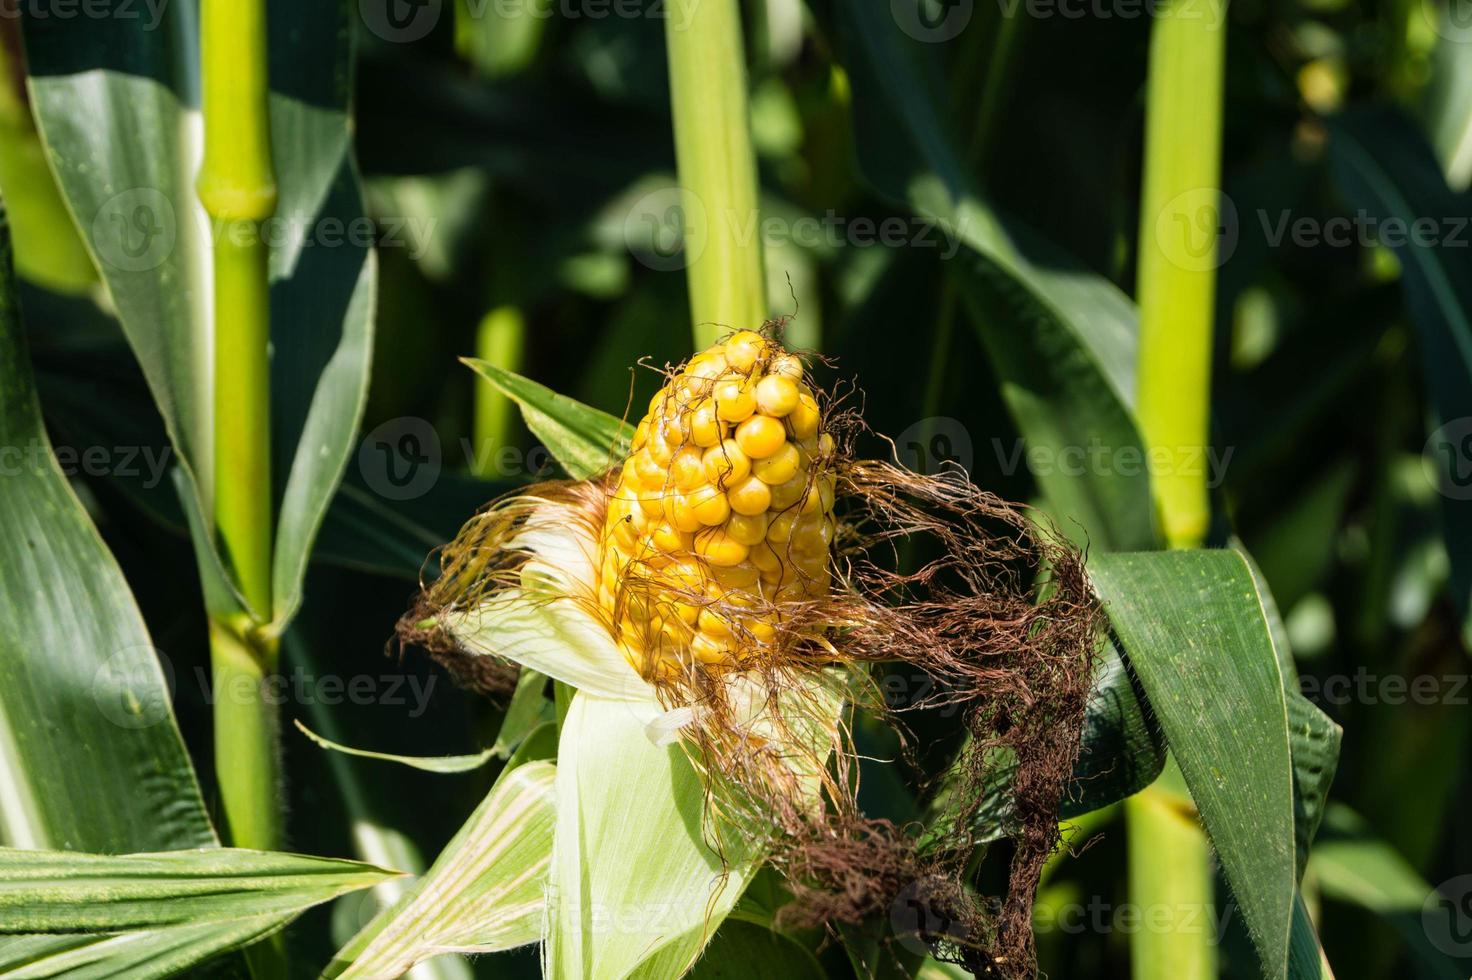 The corn disease photo